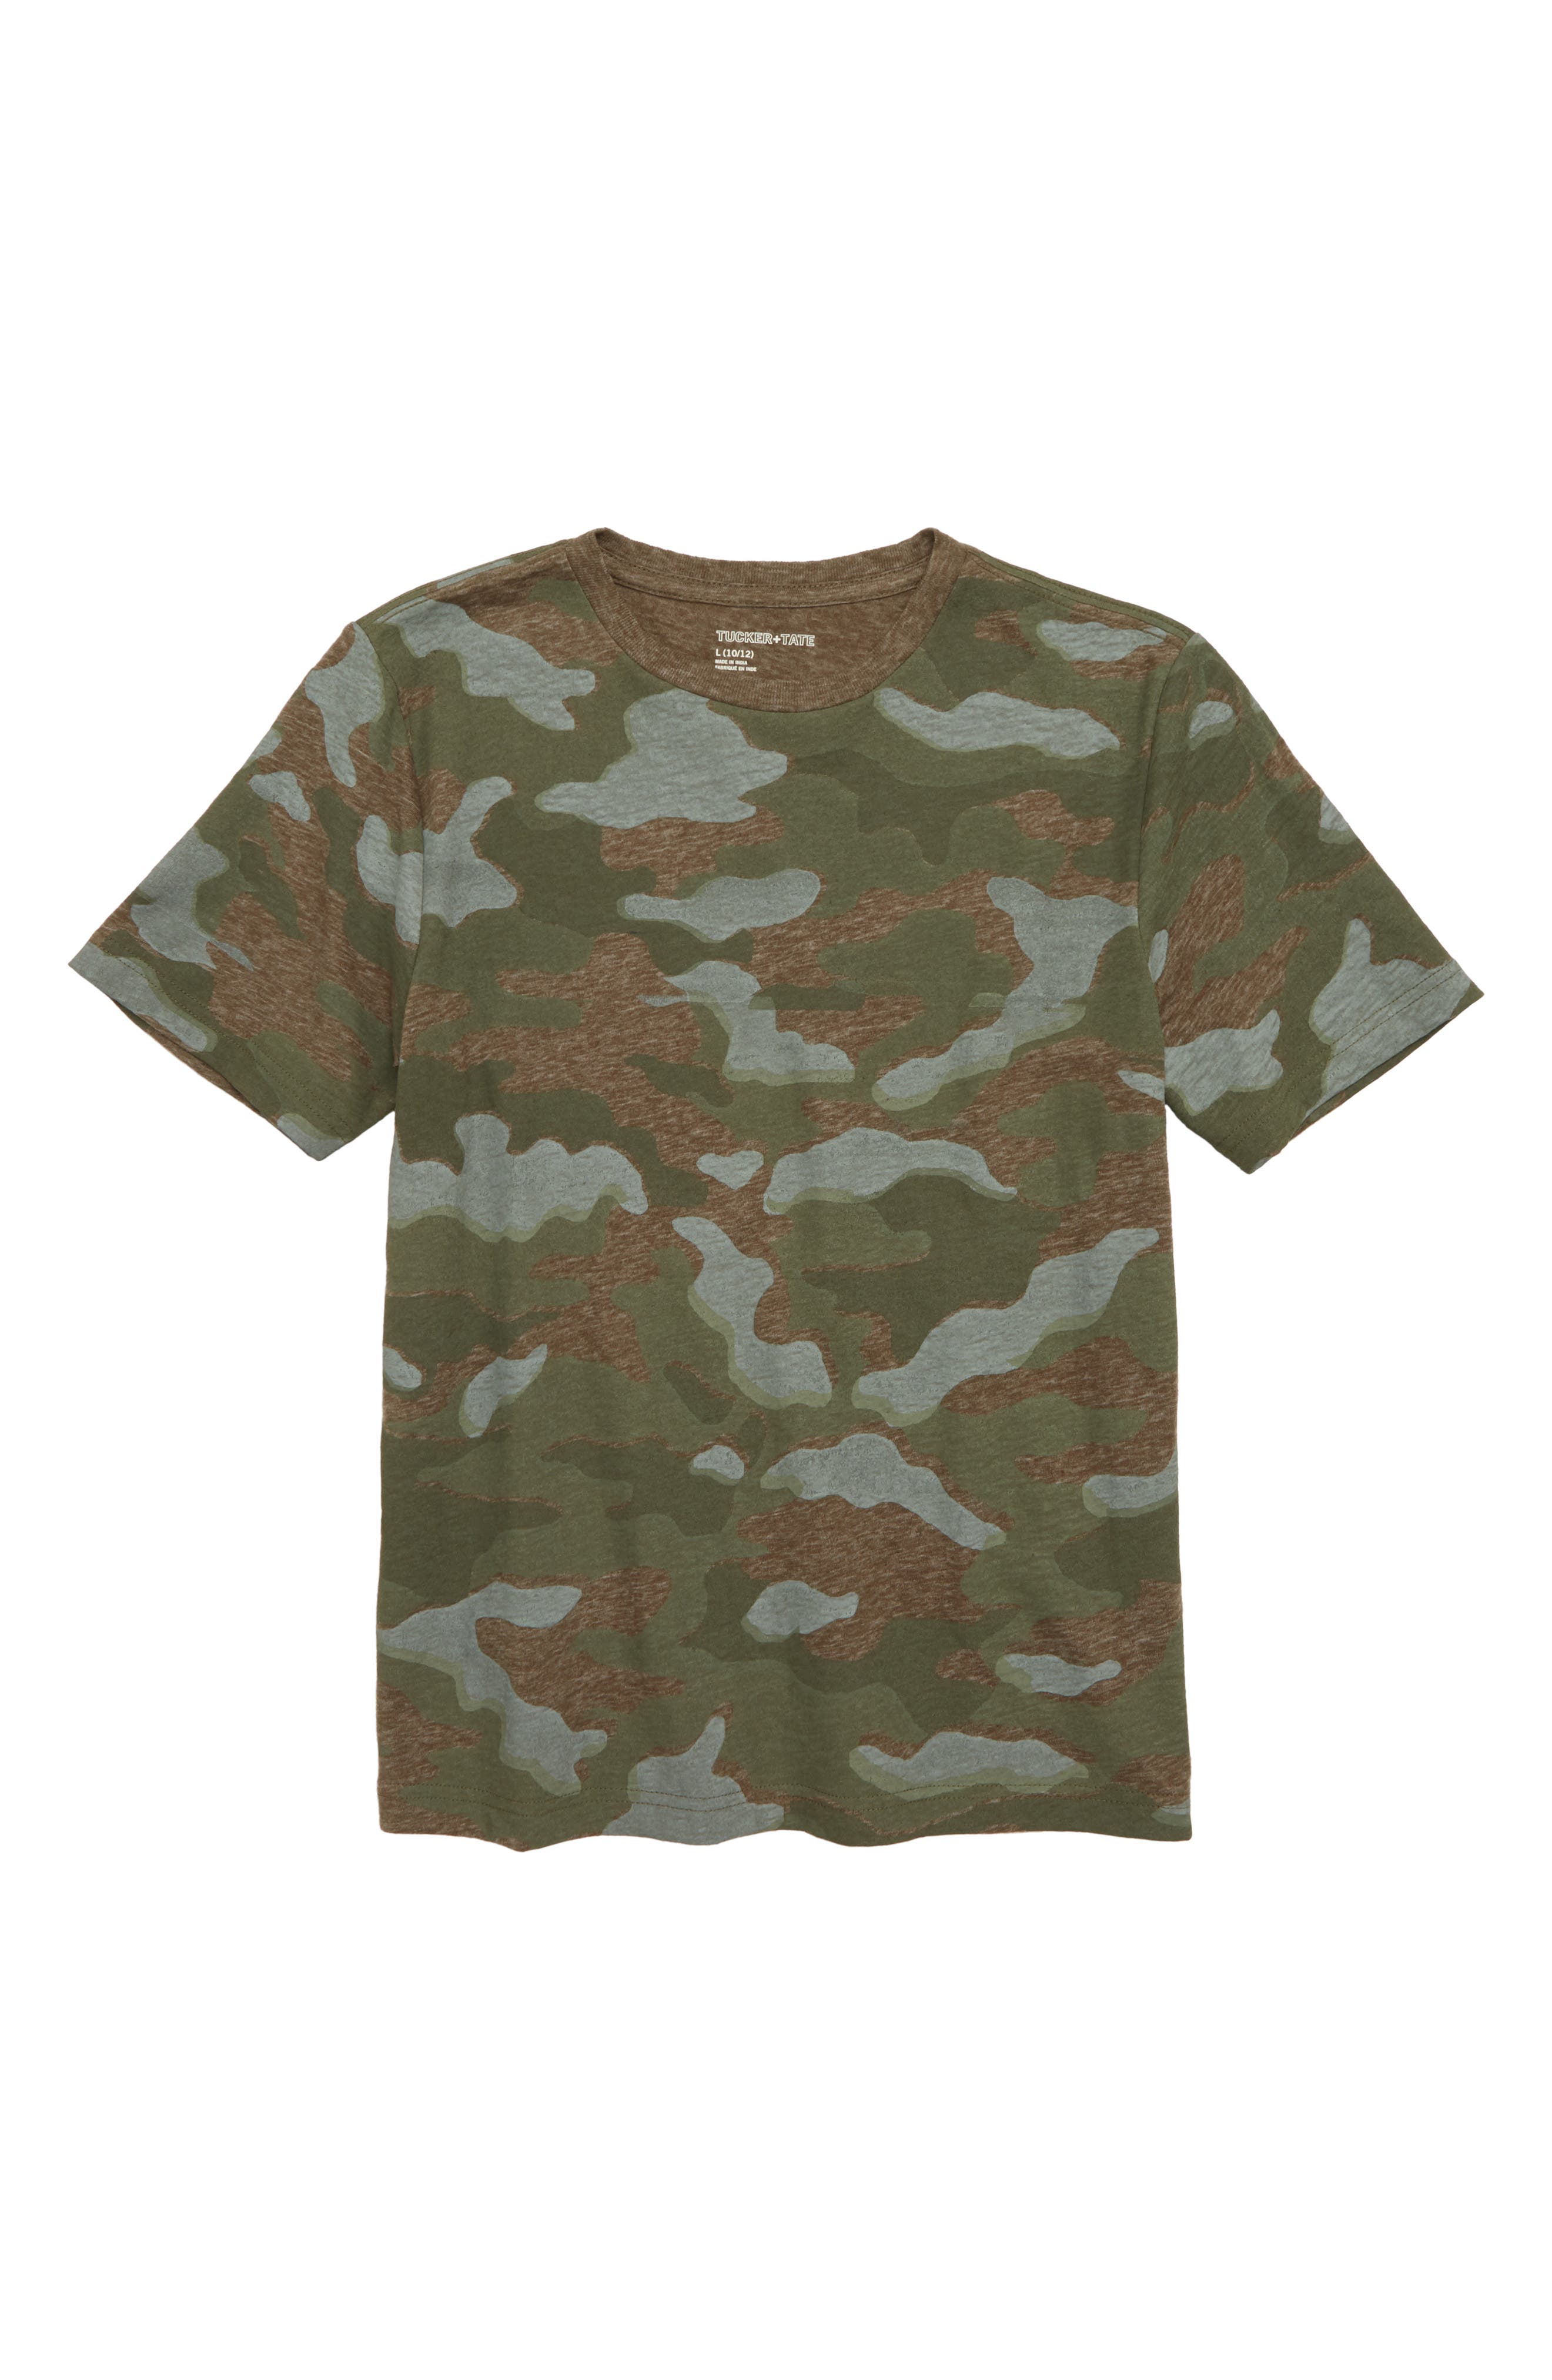 Roblox Army T Shirt